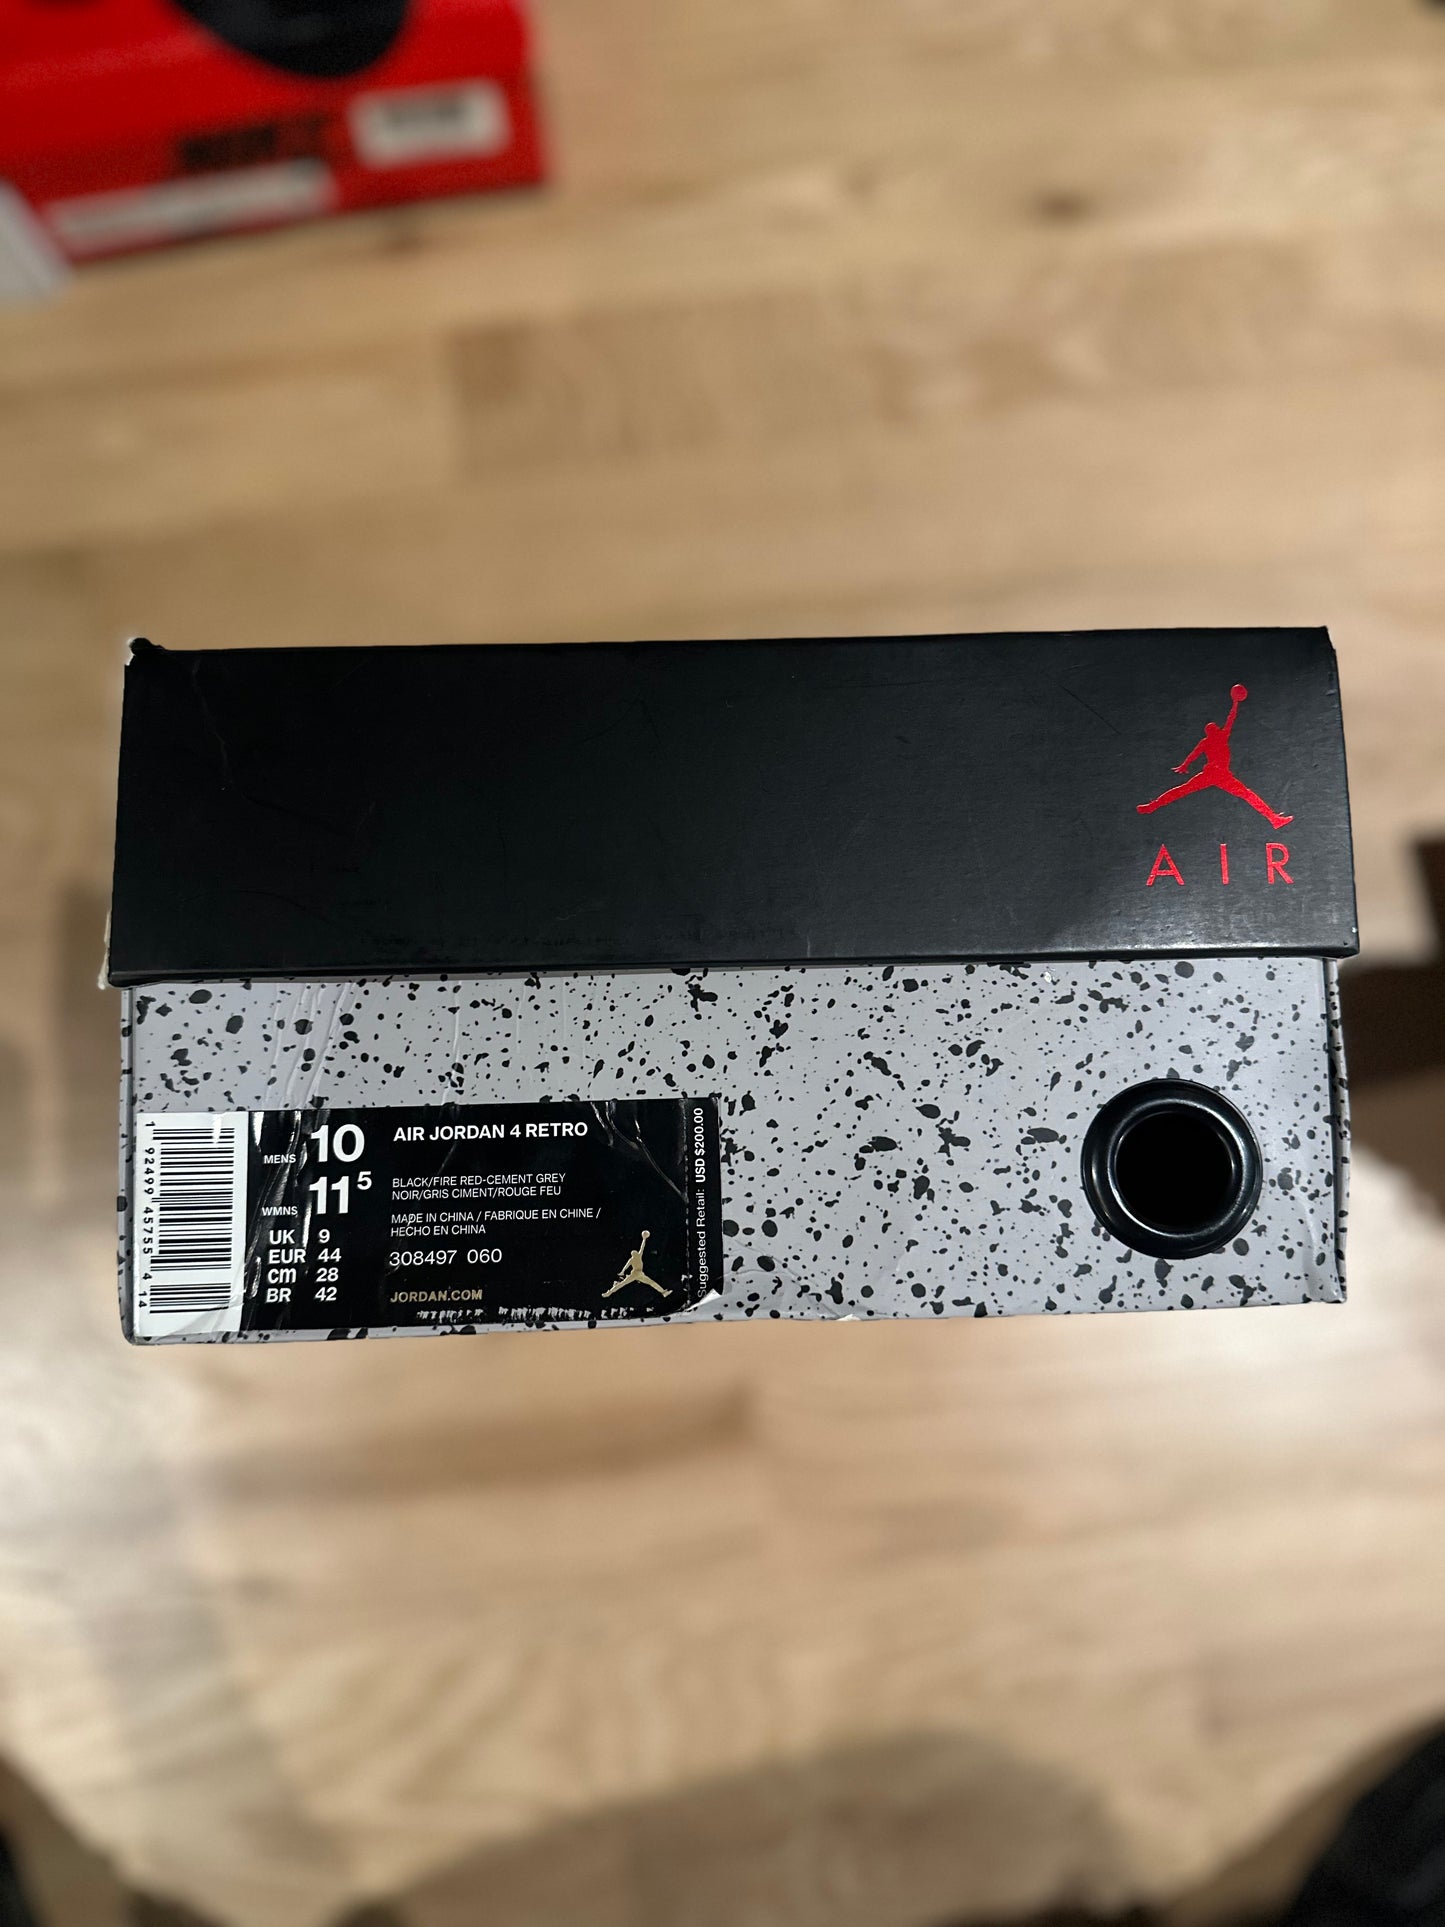 Air Jordan 4 Retro “Bred” (2019) Size 10 PO RB